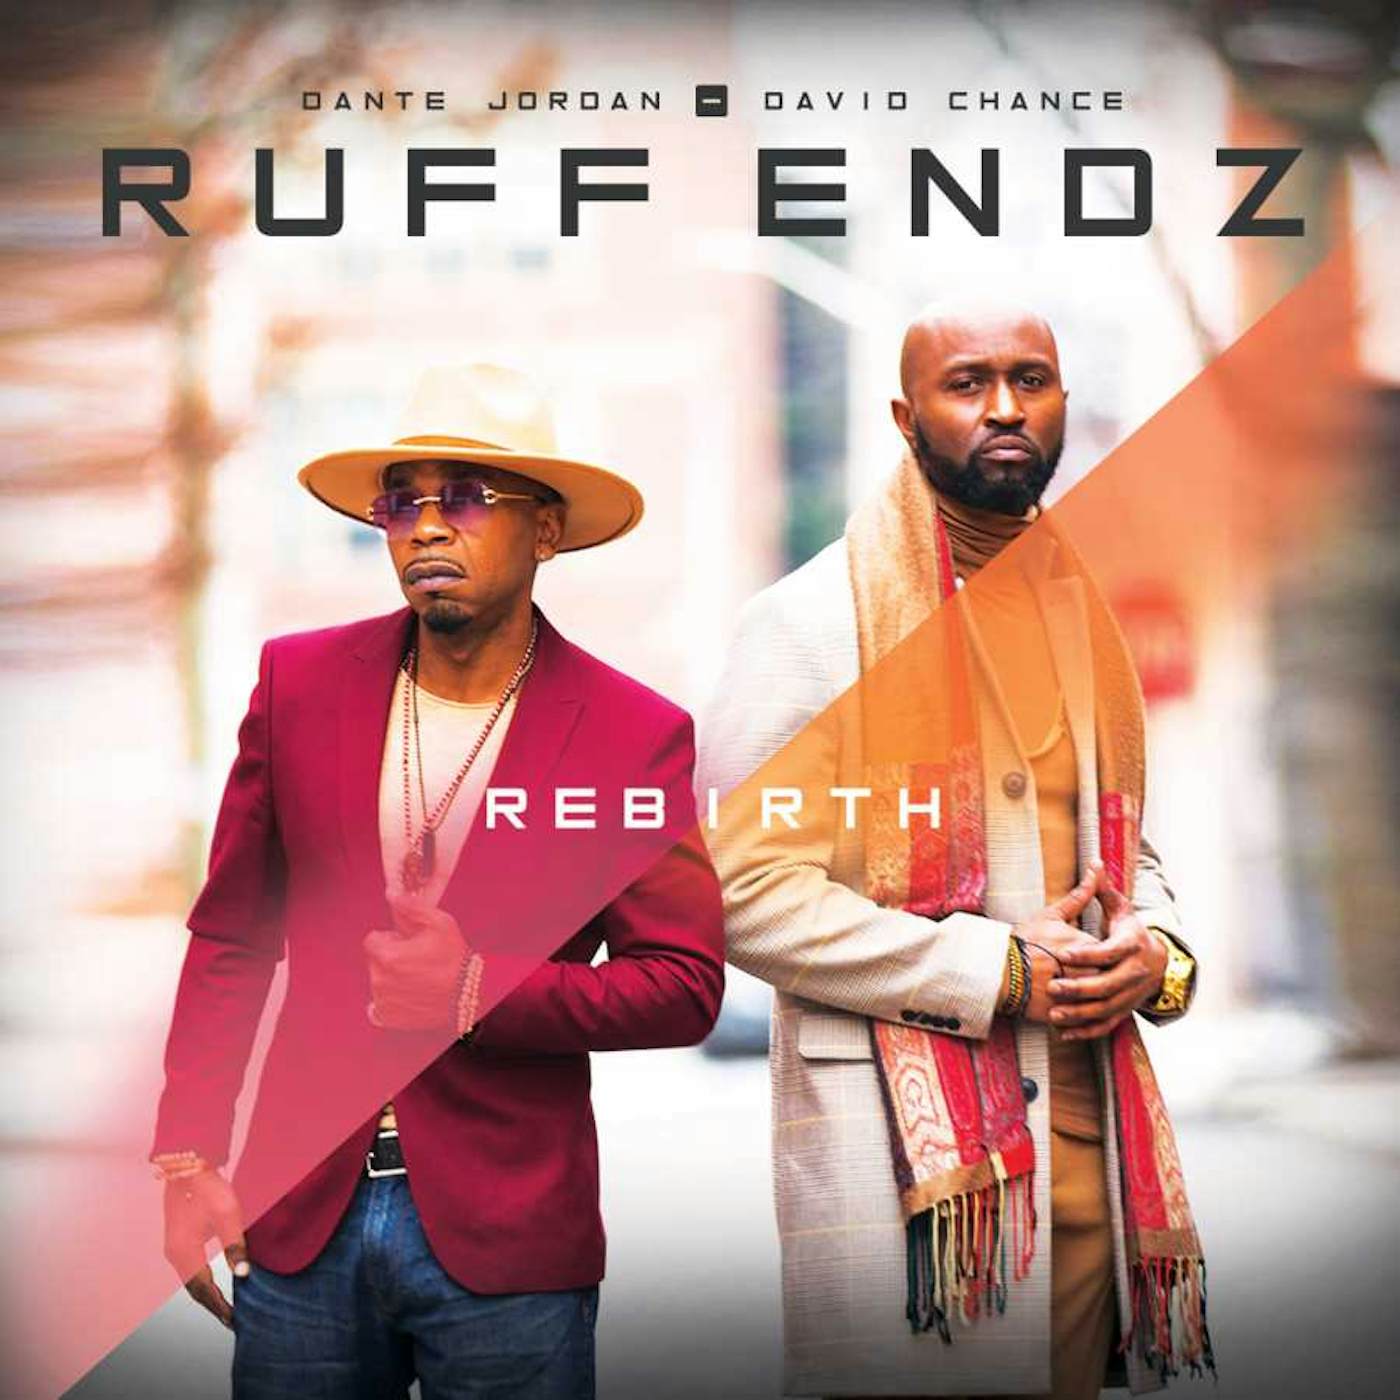 Ruff Endz REBIRTH CD